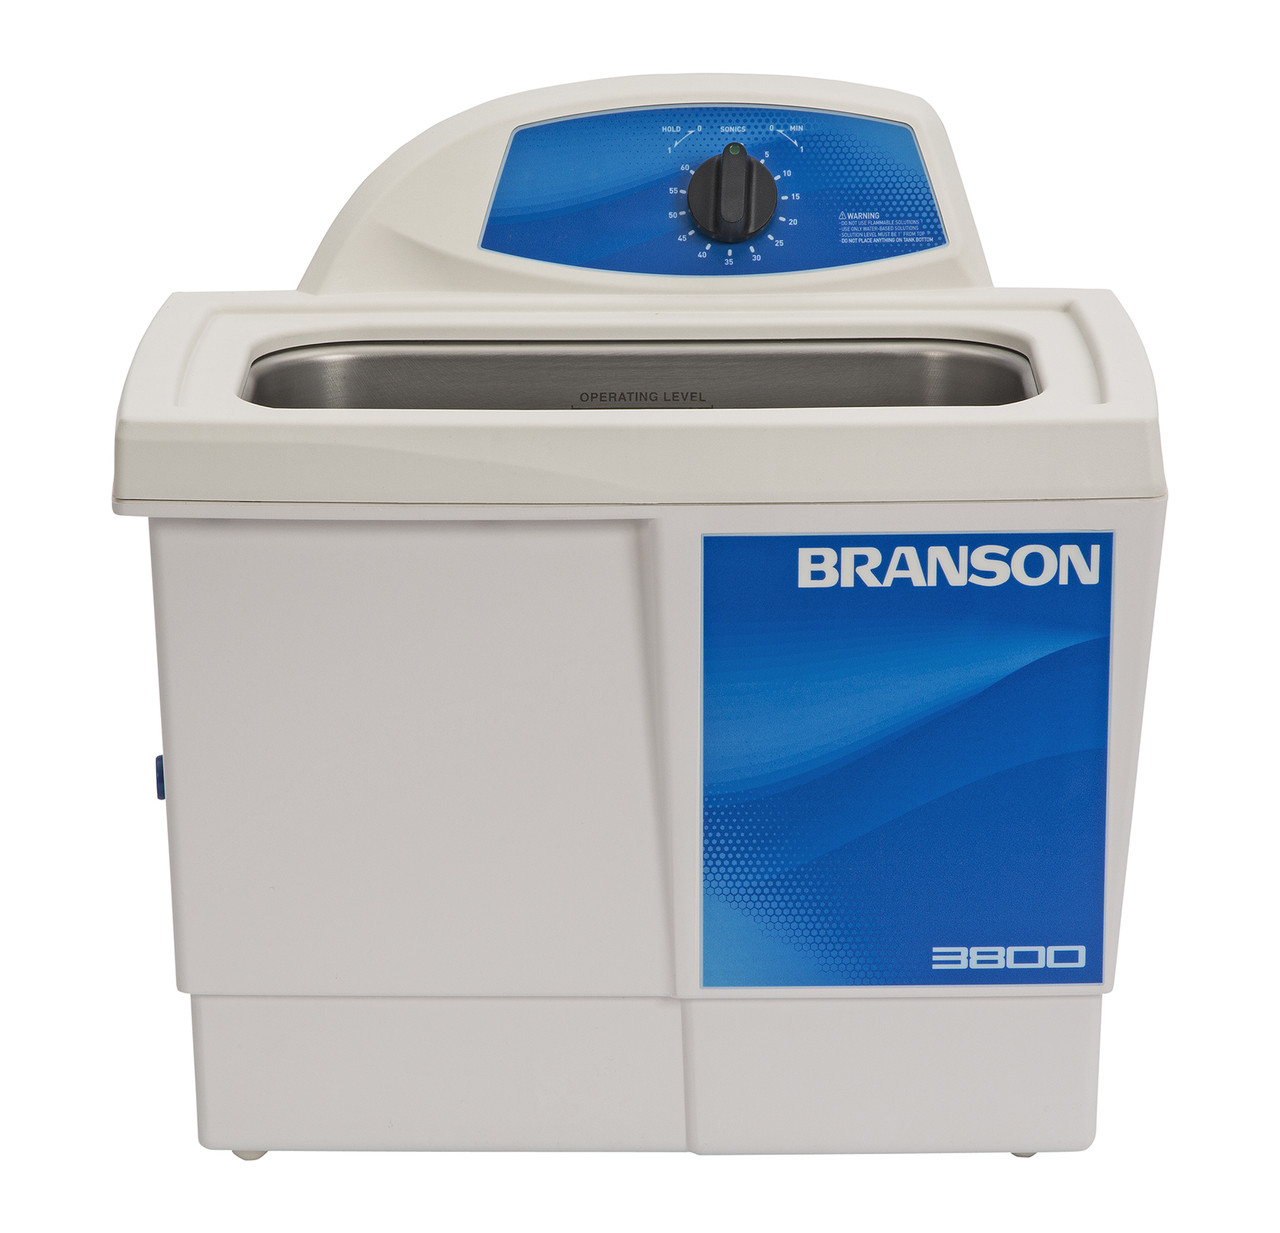 Branson M3800 Ultrasonic Cleaner